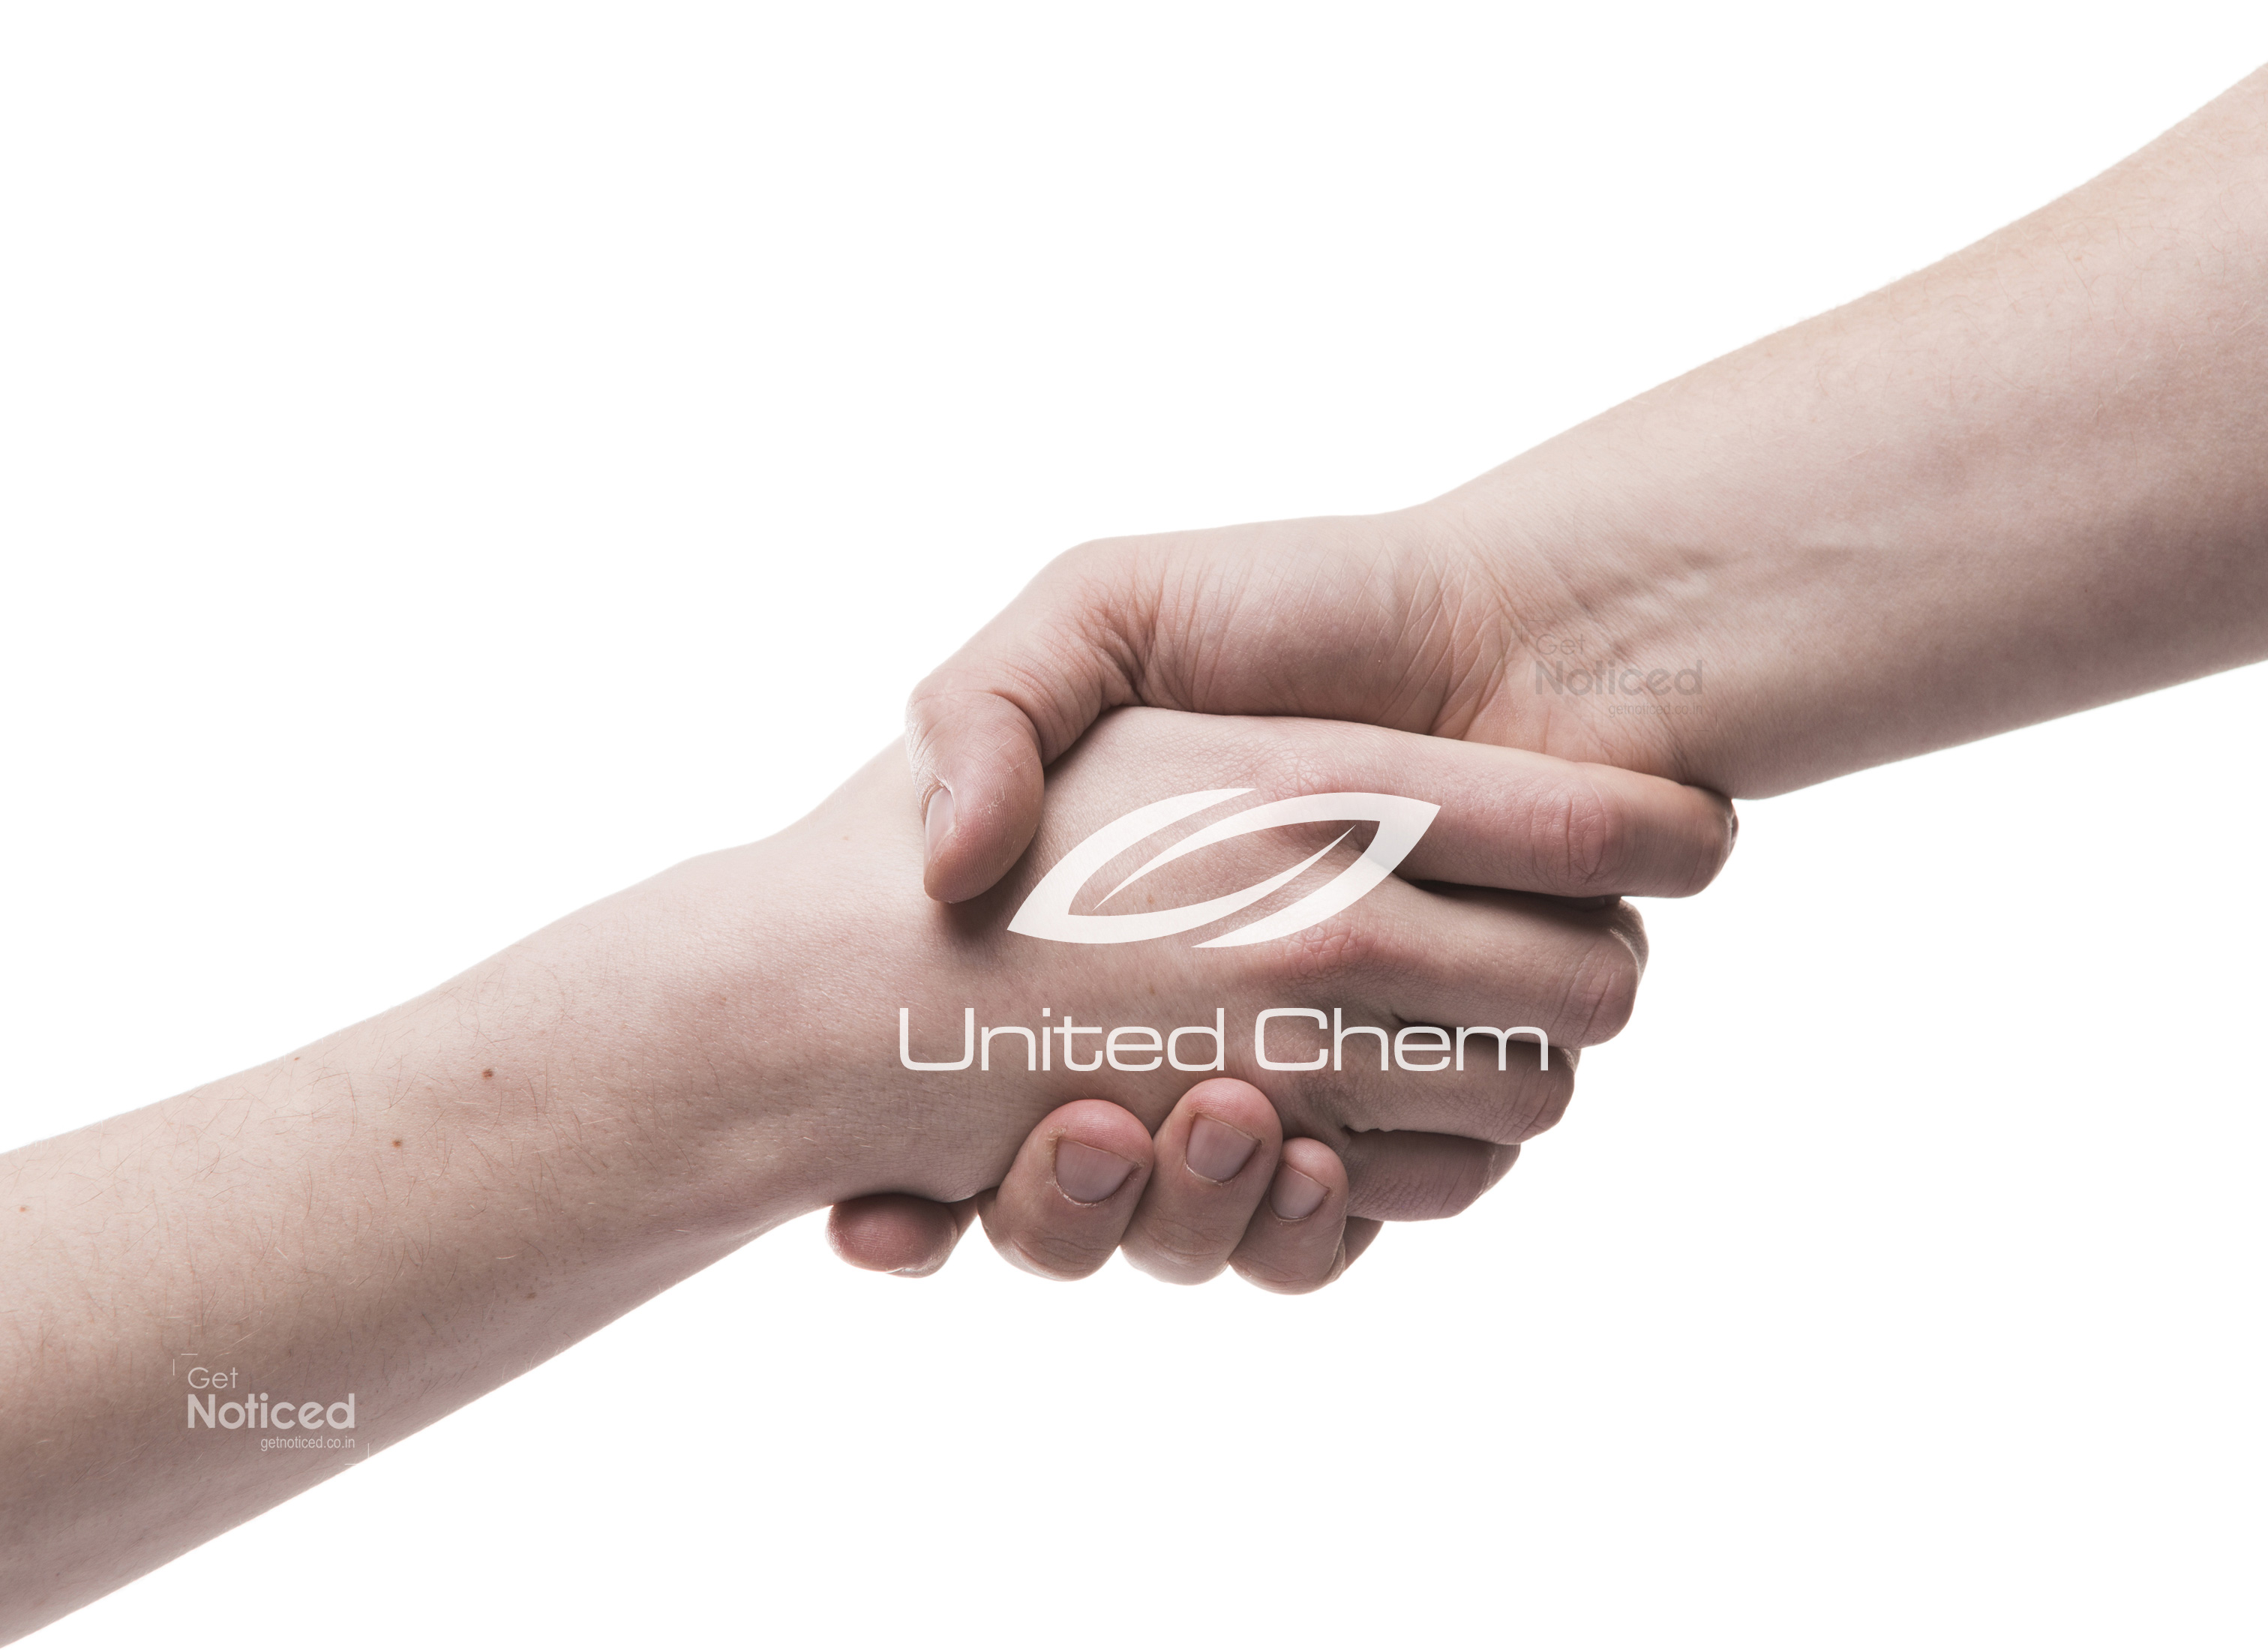 United Chem Logo Design